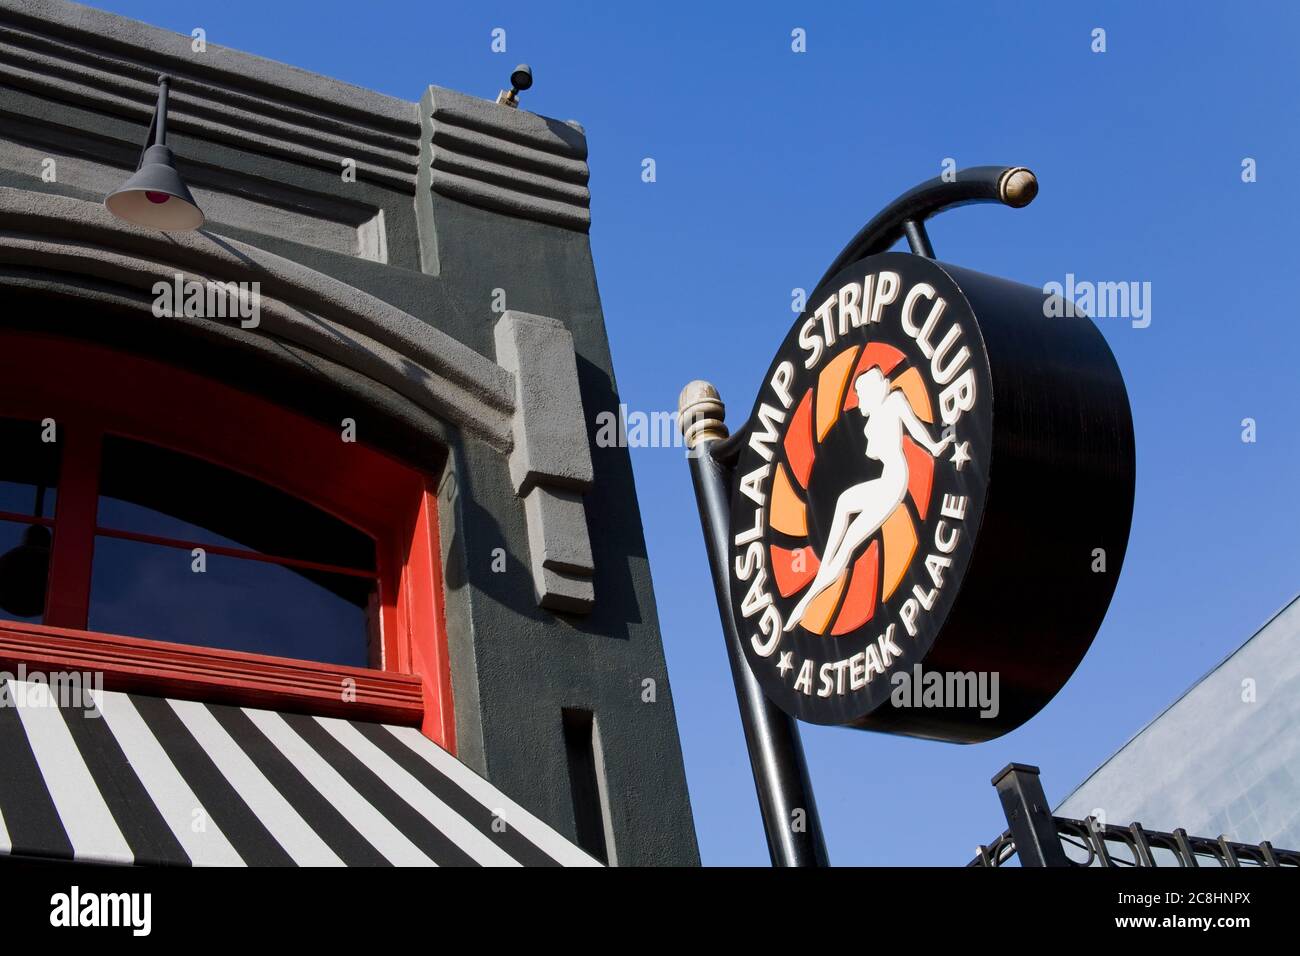 Strip Club Restaurant in the Gaslamp Quarter, San Diego, California, USA Stock Photo